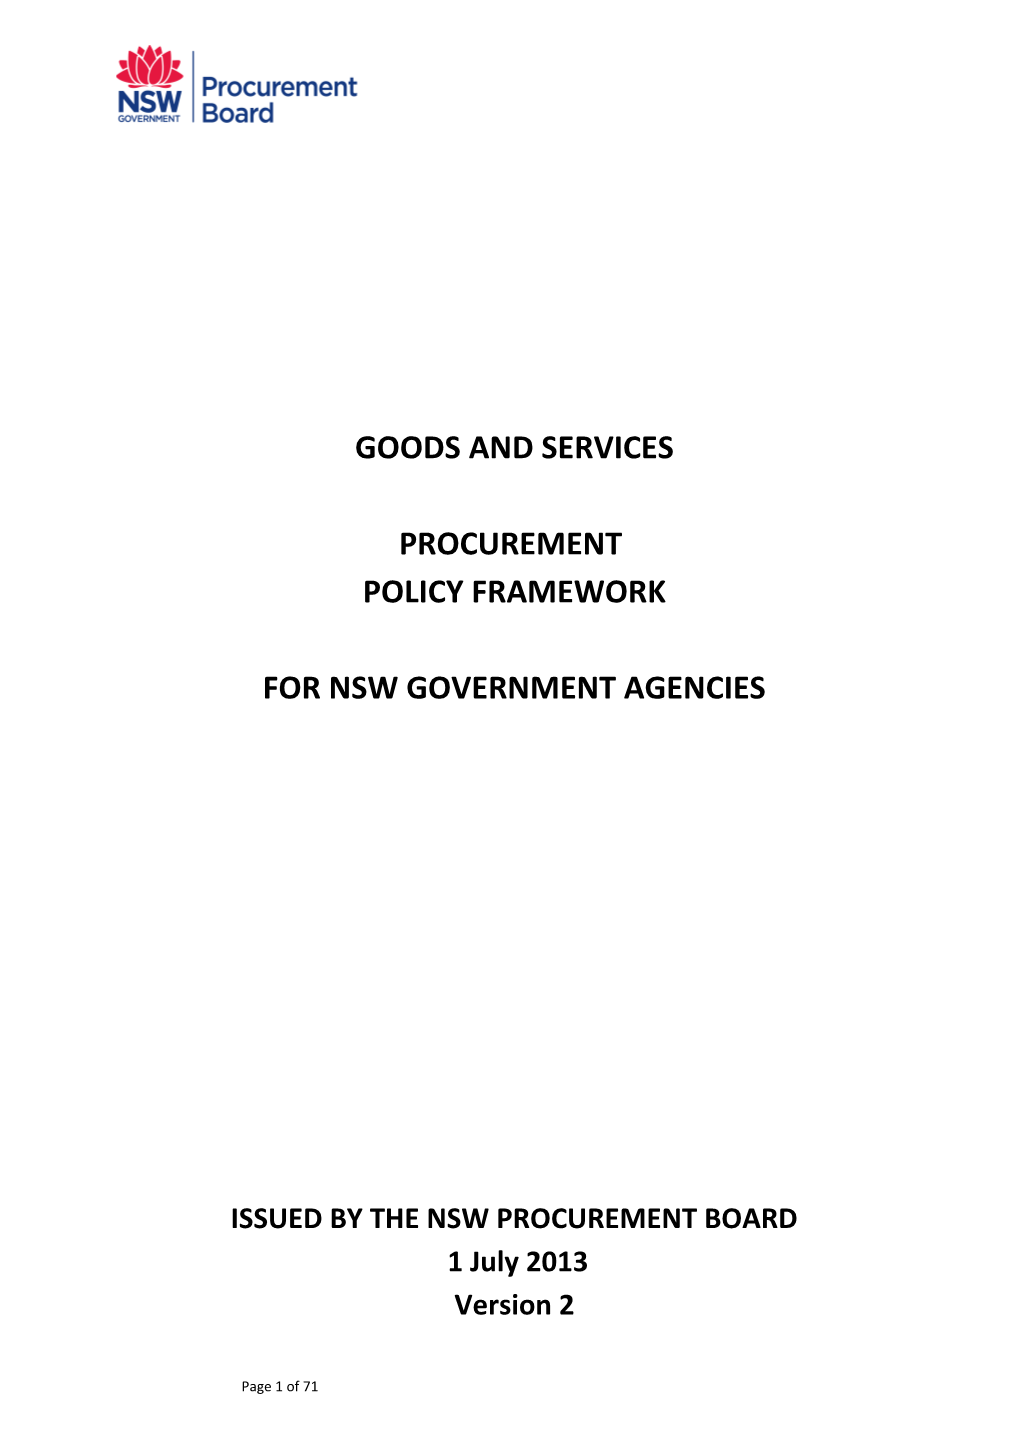 Goods and Services Procurement